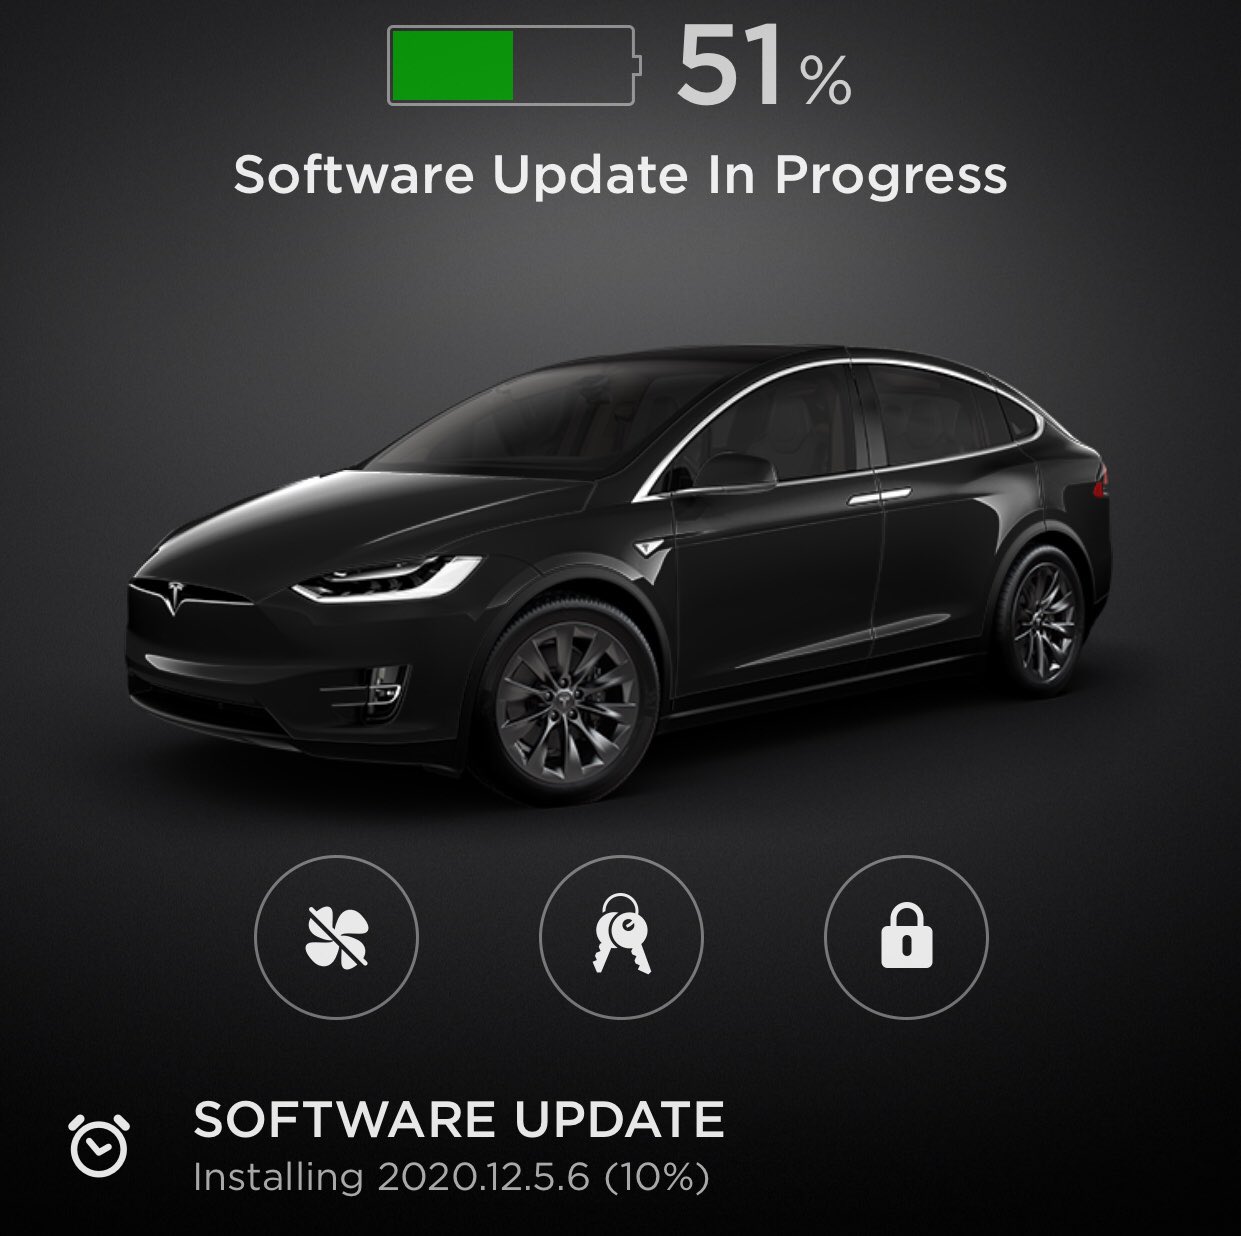 Tesla-2020.12.5.6-OTA-update-traffic-lights